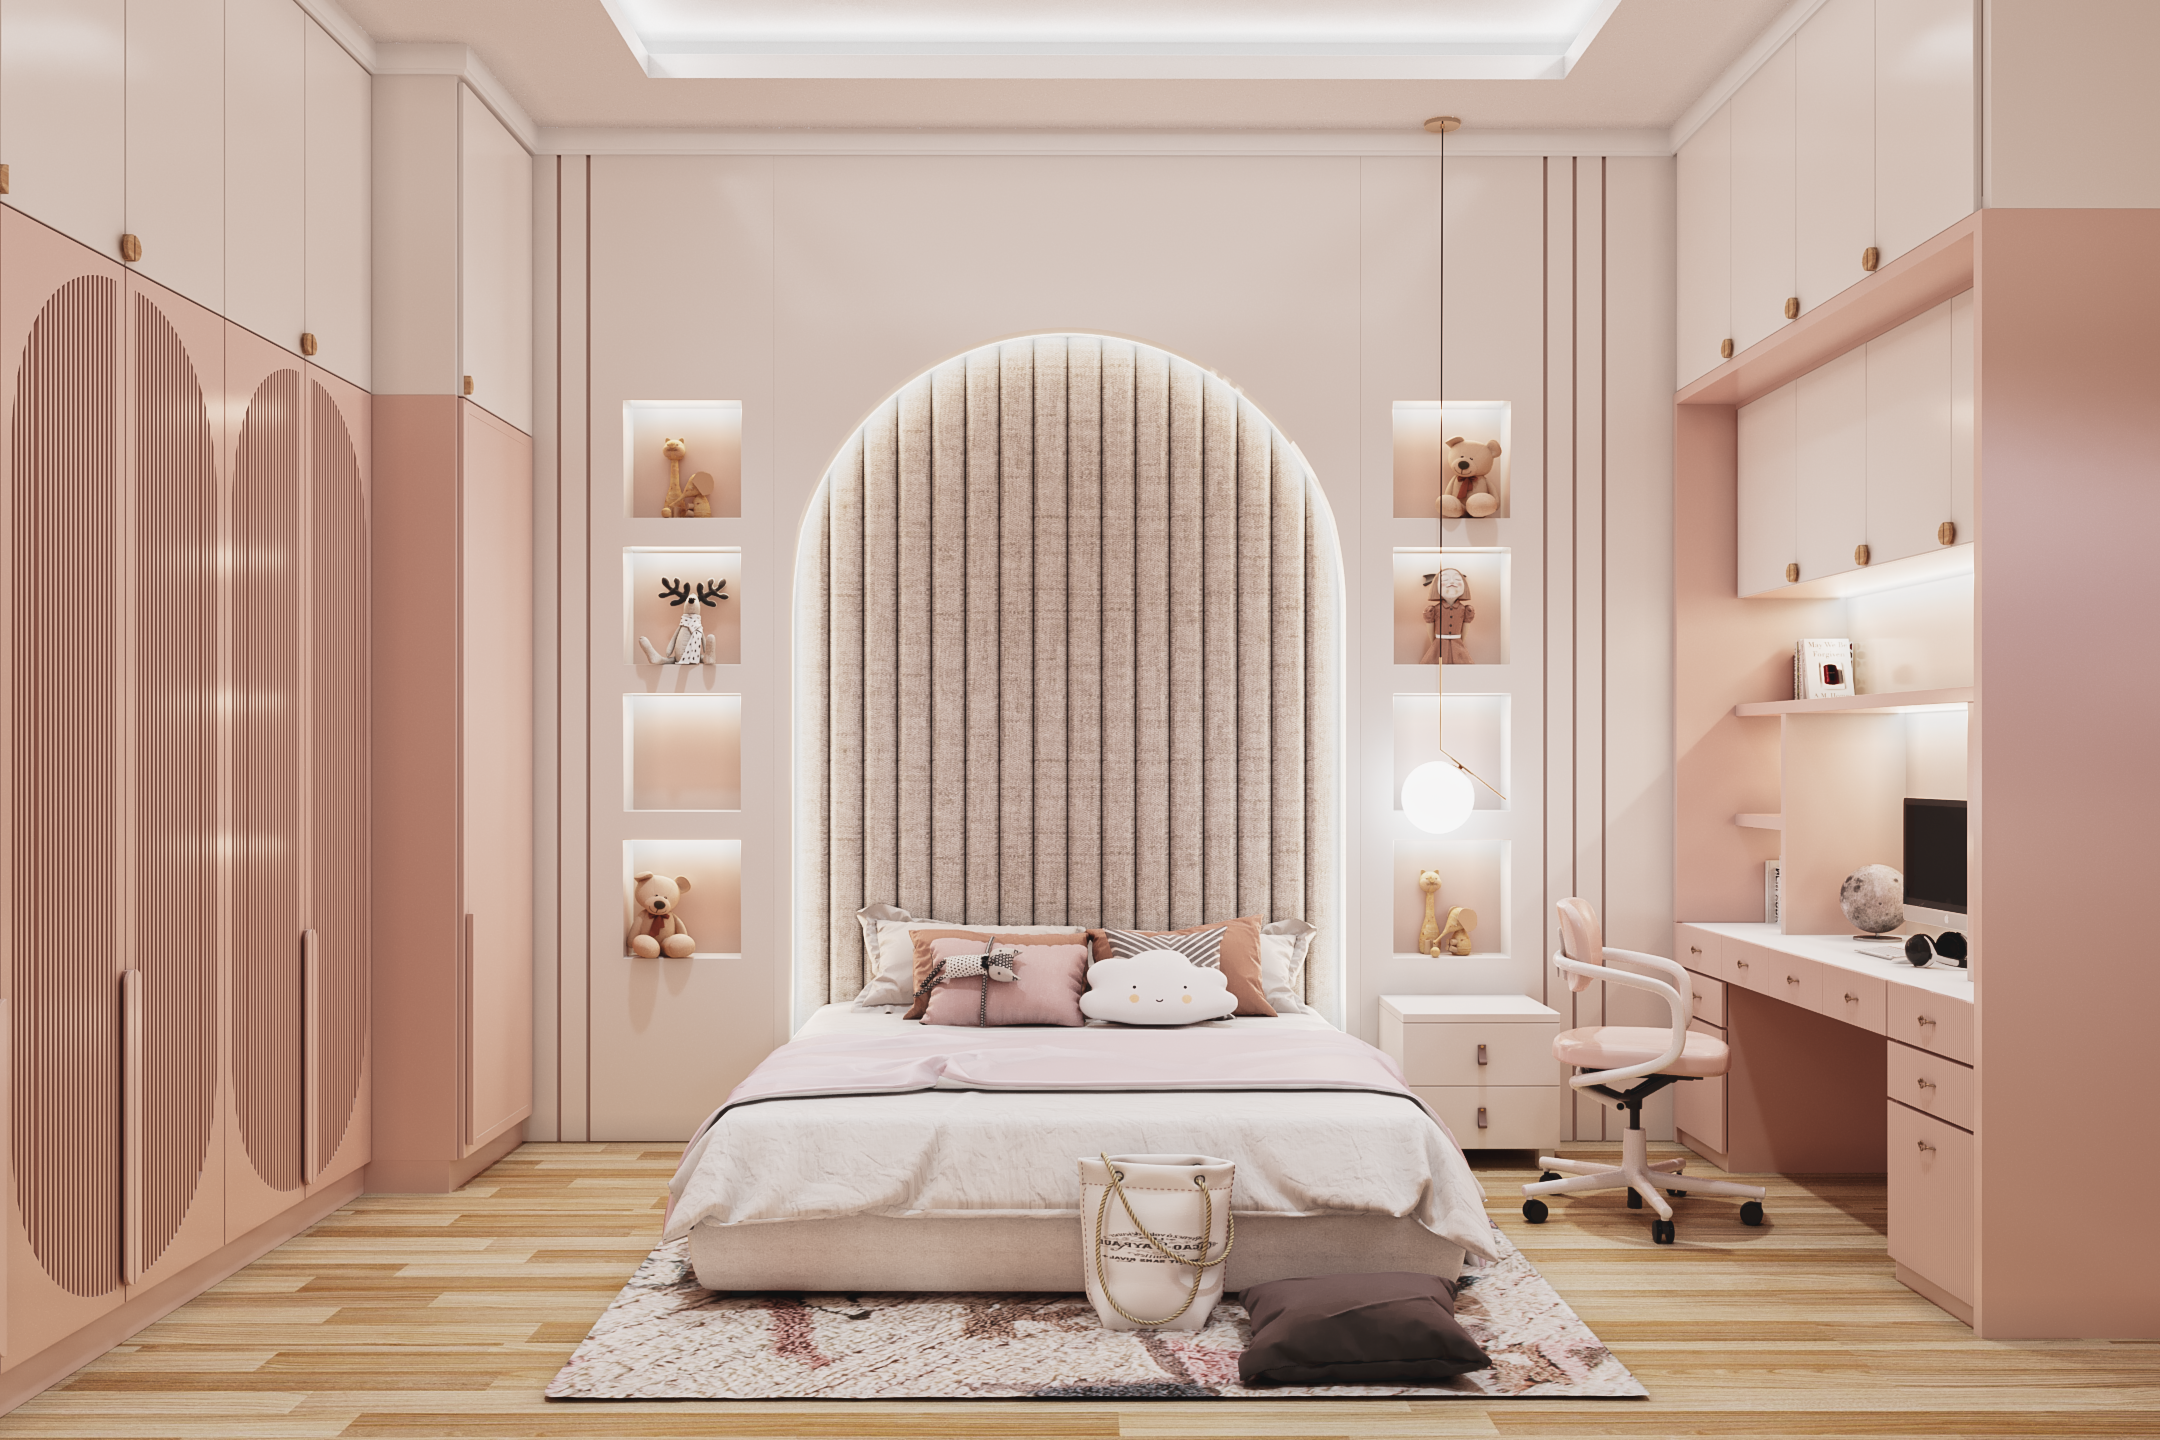 desain kamar tidur anak modern